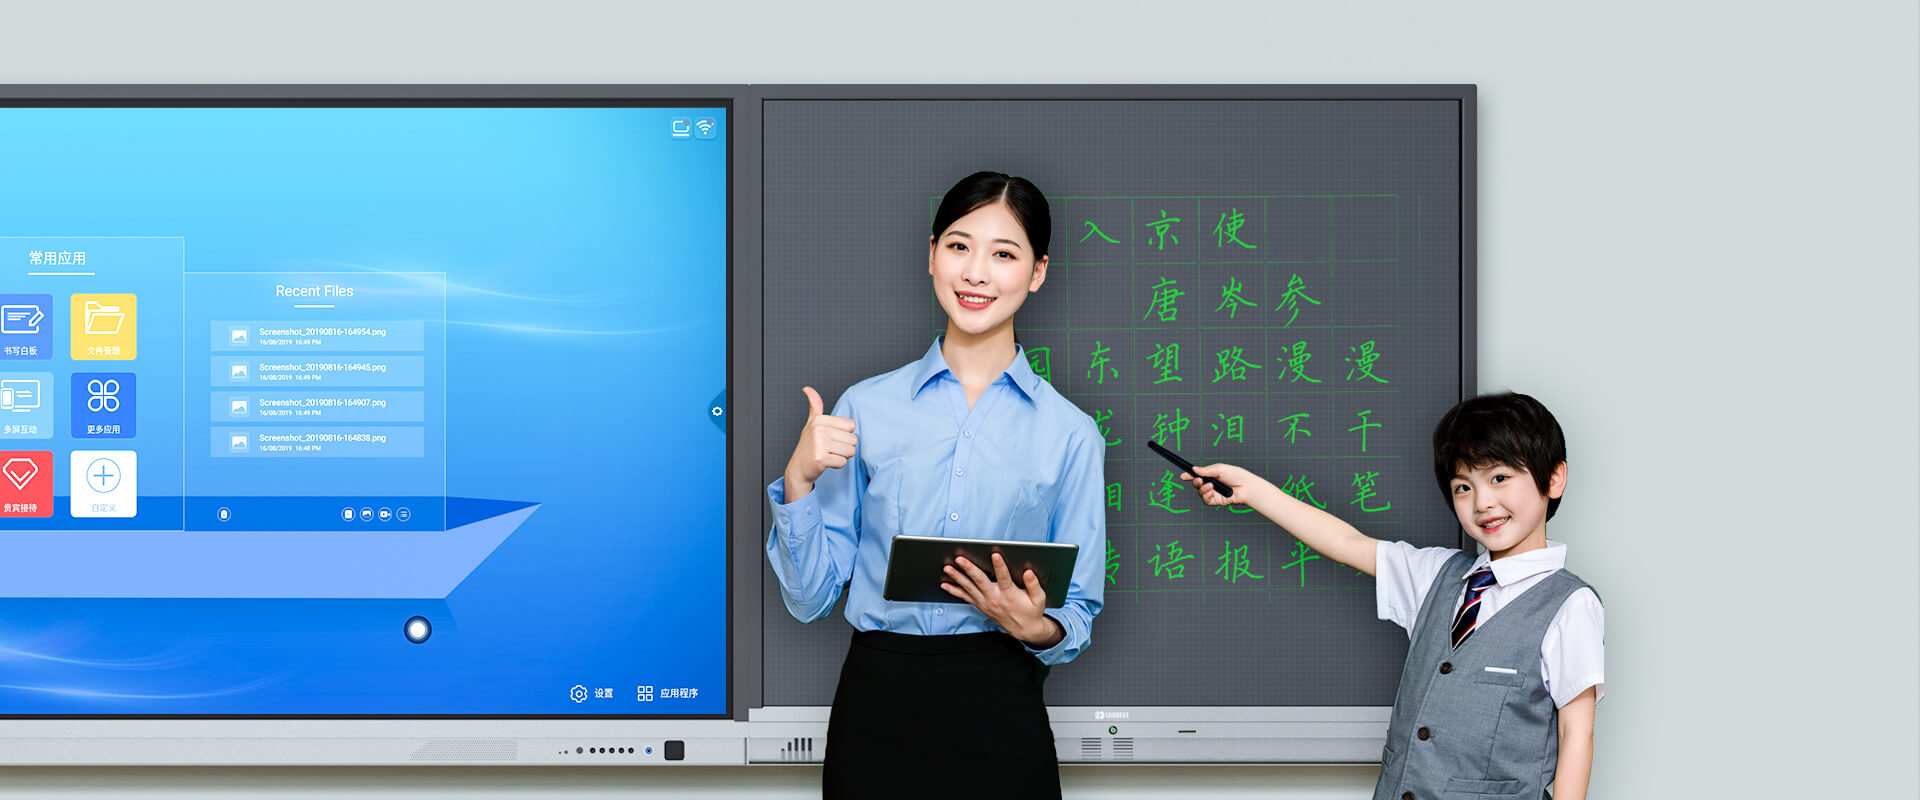 Grupo de equipamiento educativo Shandong Lanbeisite